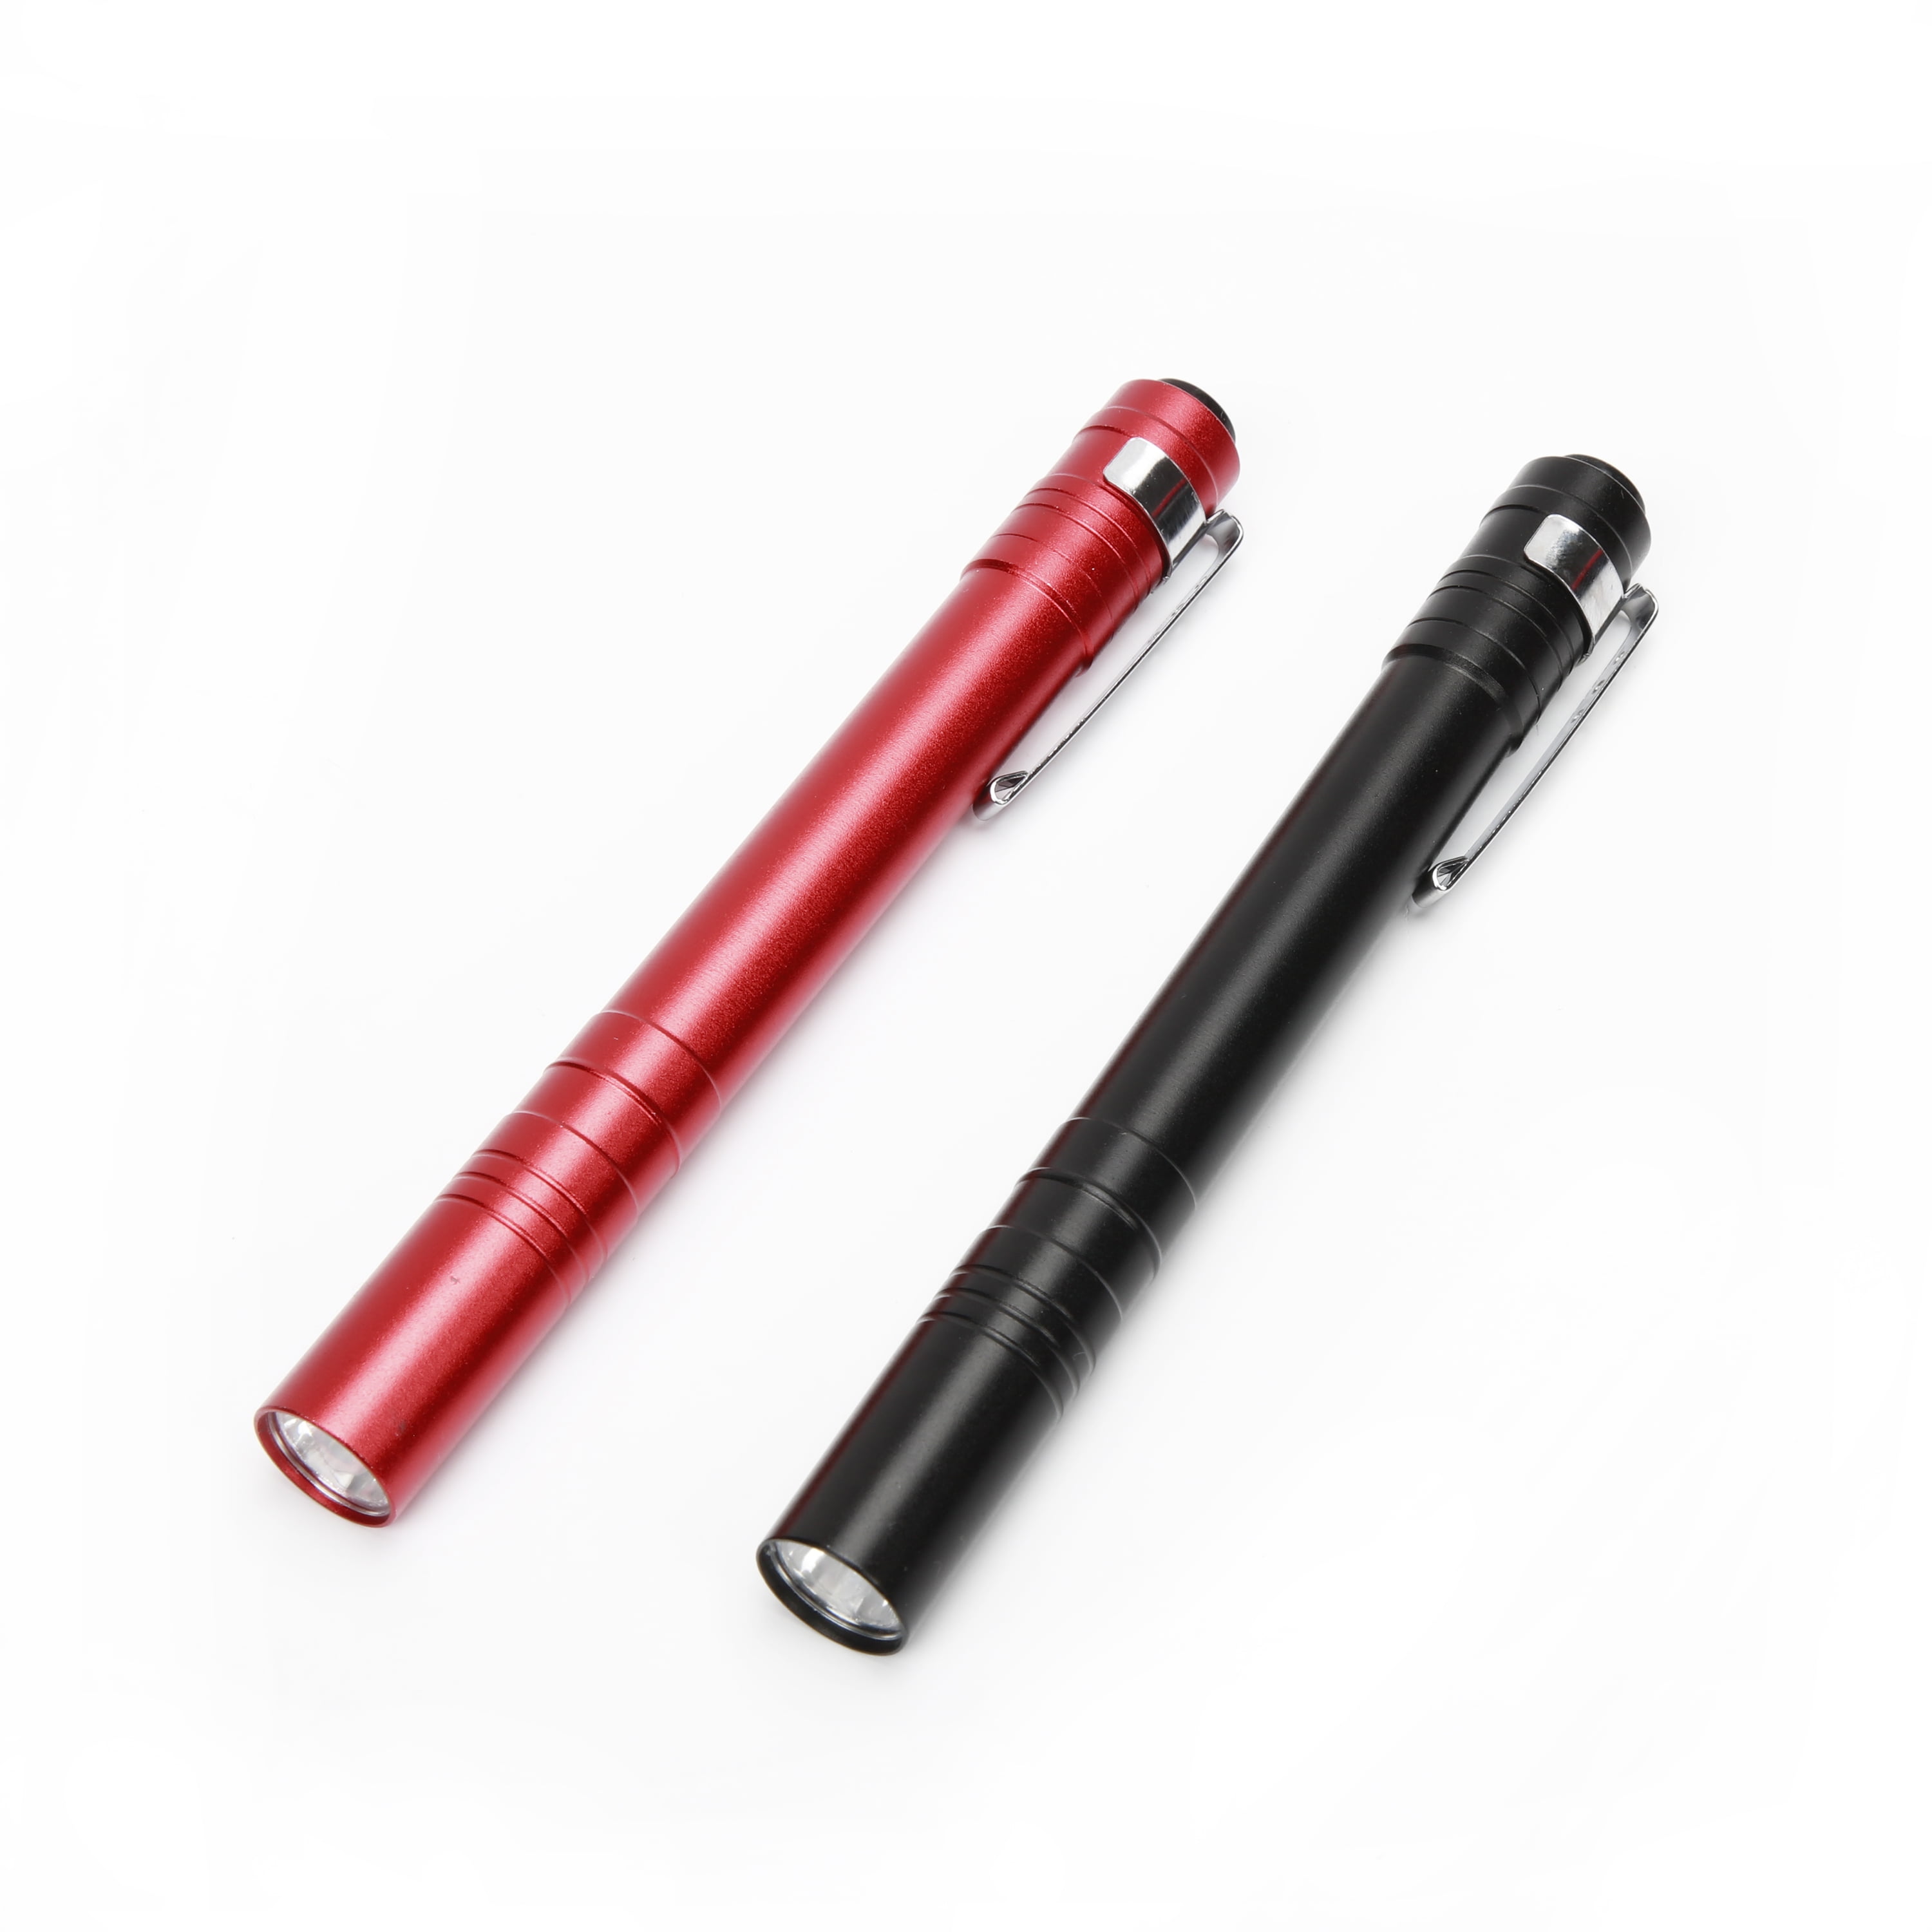 Hyper Tough Aluminum LED Penlight, Portable Flashlight, 25-Lumen, Black, Red